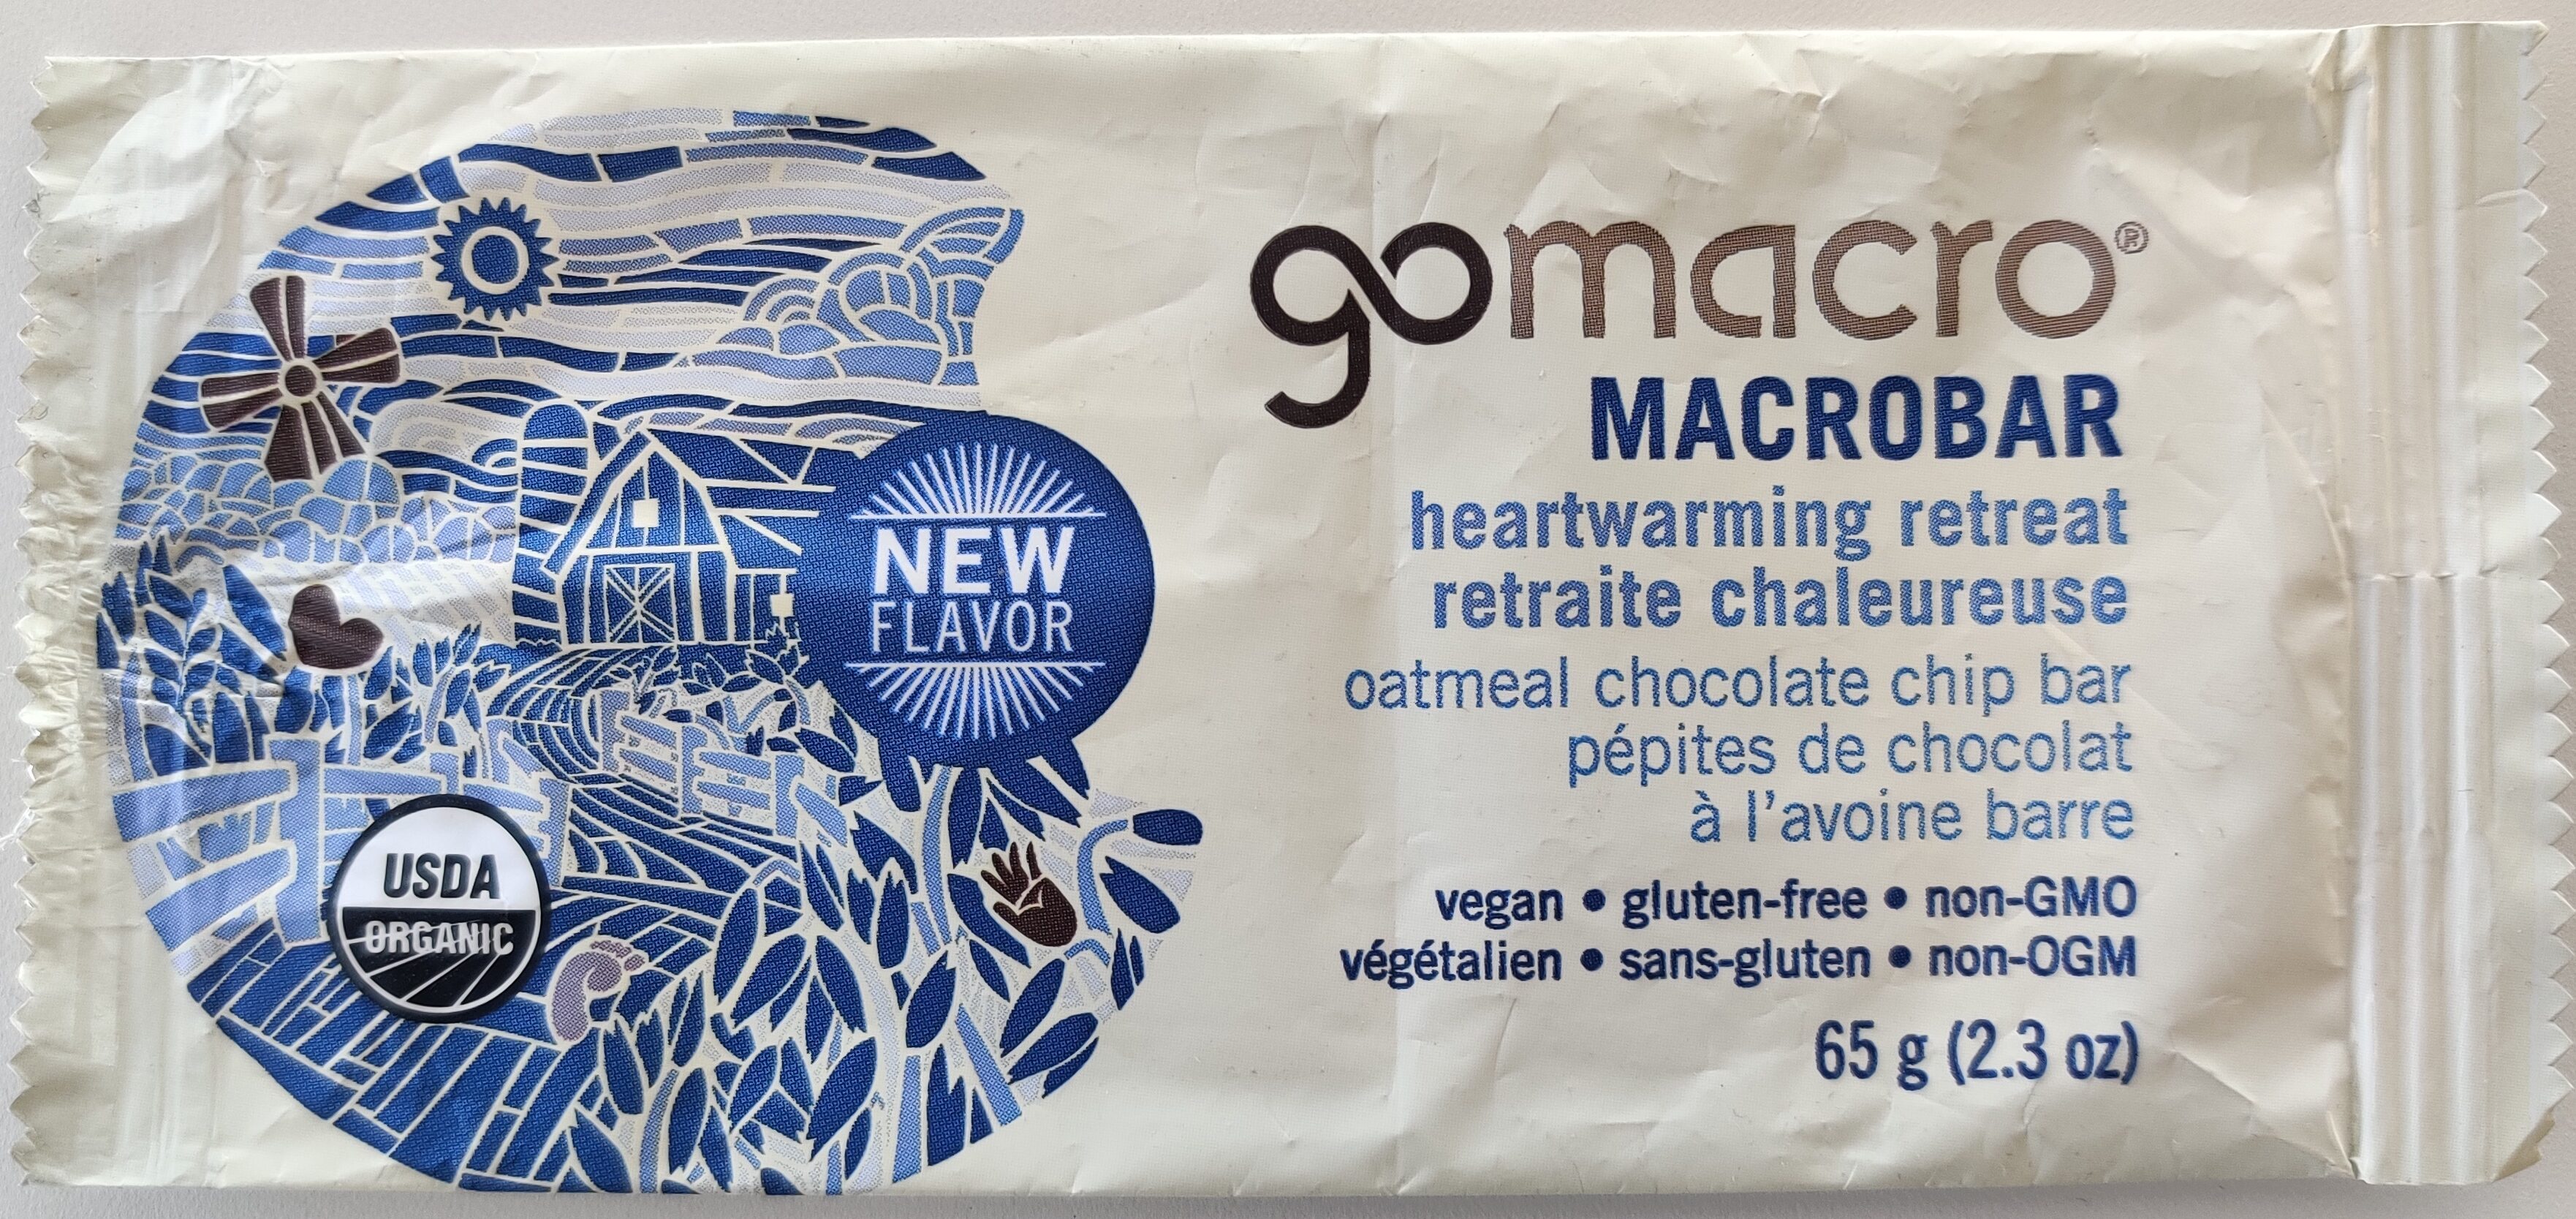 Macrobar - Oatmeal Chocolate Chip Bar - Product - en